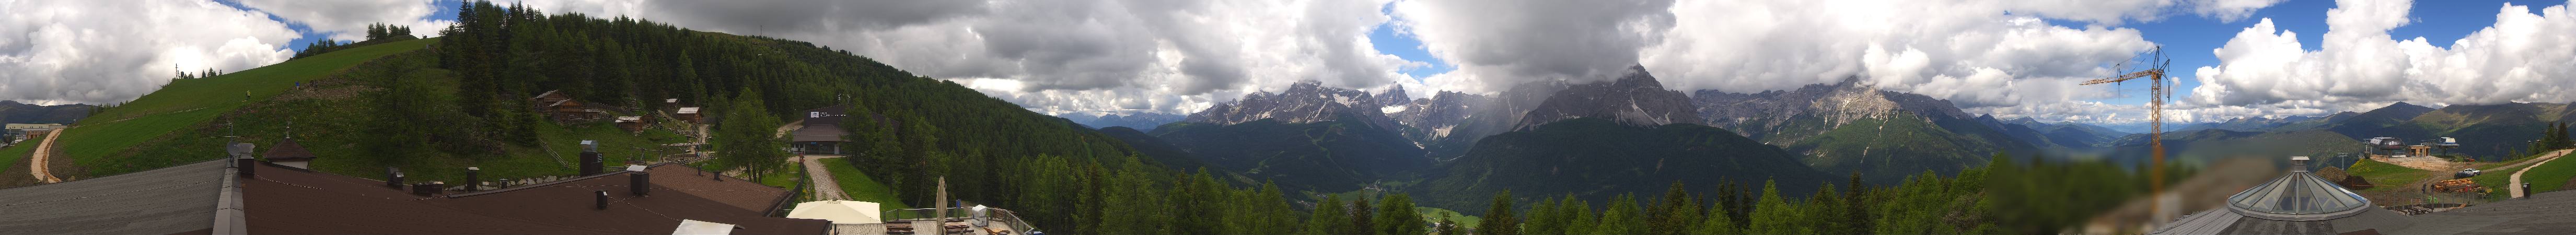 Webcam Panoramica Monte Elmo - Sesto/Versciaco, Tre Cime Dolomiti